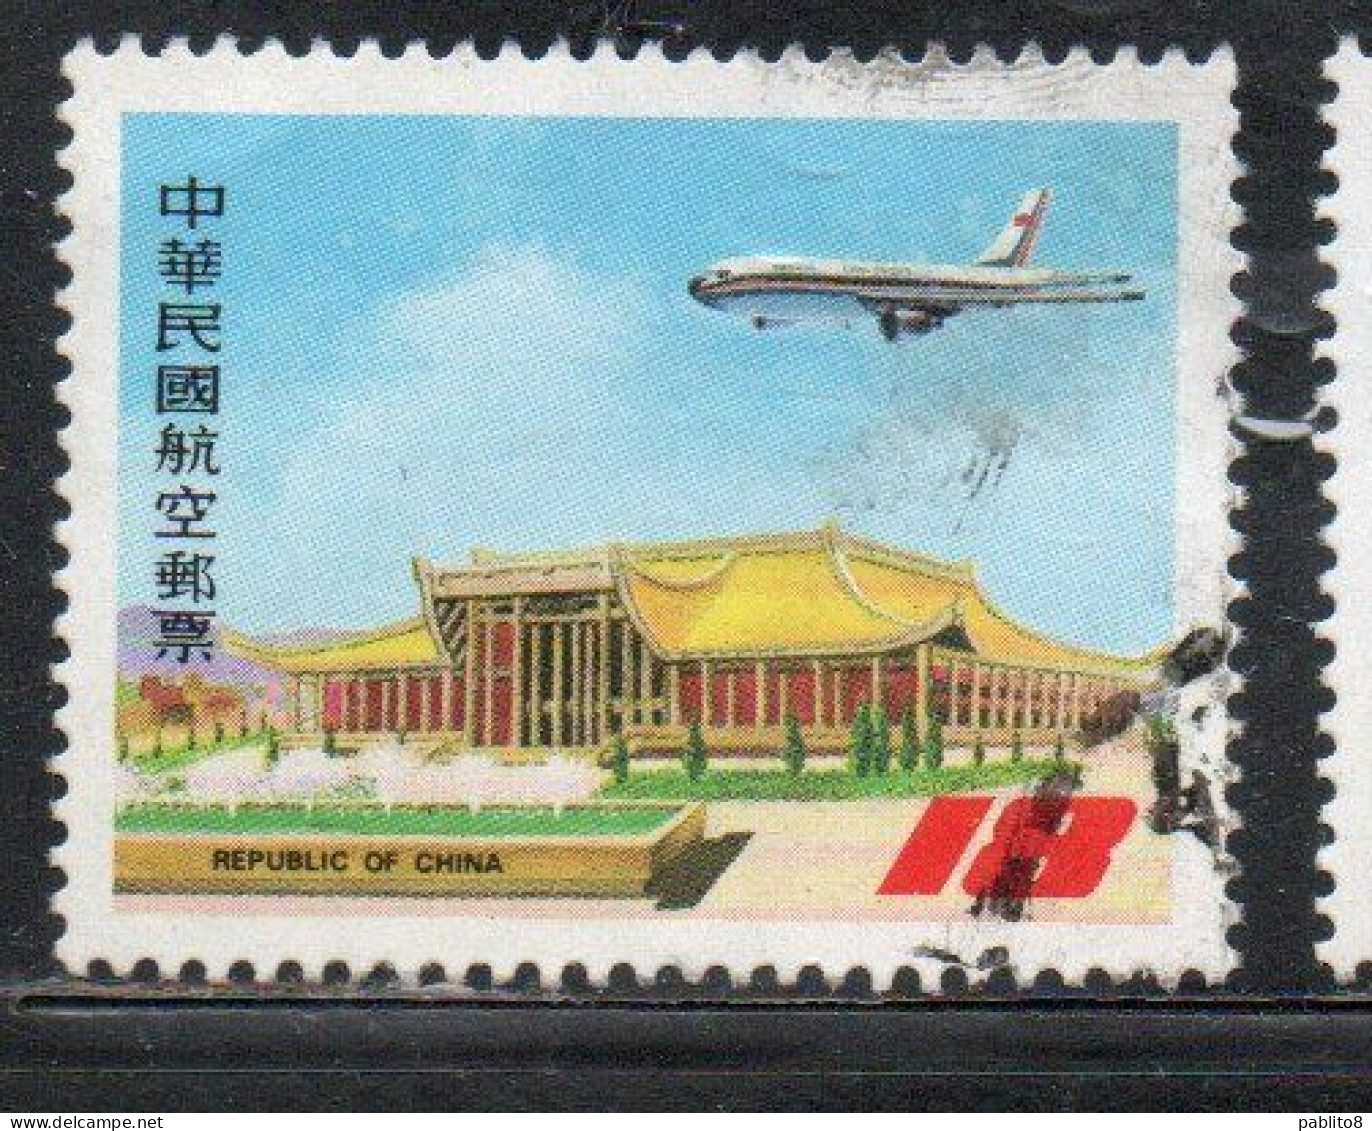 CHINA REPUBLIC CINA TAIWAN FORMOSA 1984 AIR POST MAIL AIRMAIL CIVIL AERONAUTICS ADMINISTRATION SUN YAT-SEN 18$ USED - Luftpost